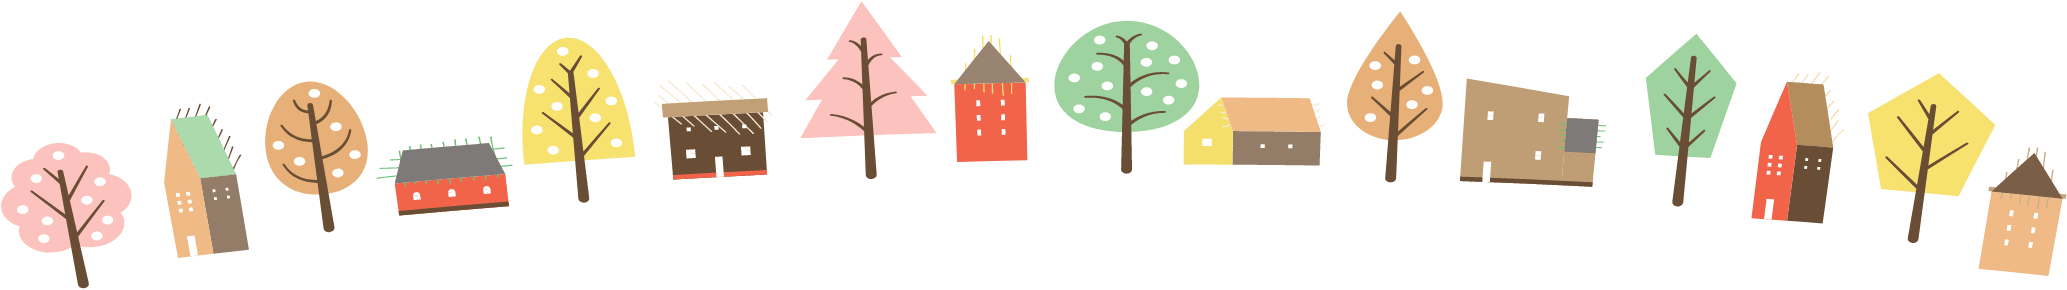 house_tree